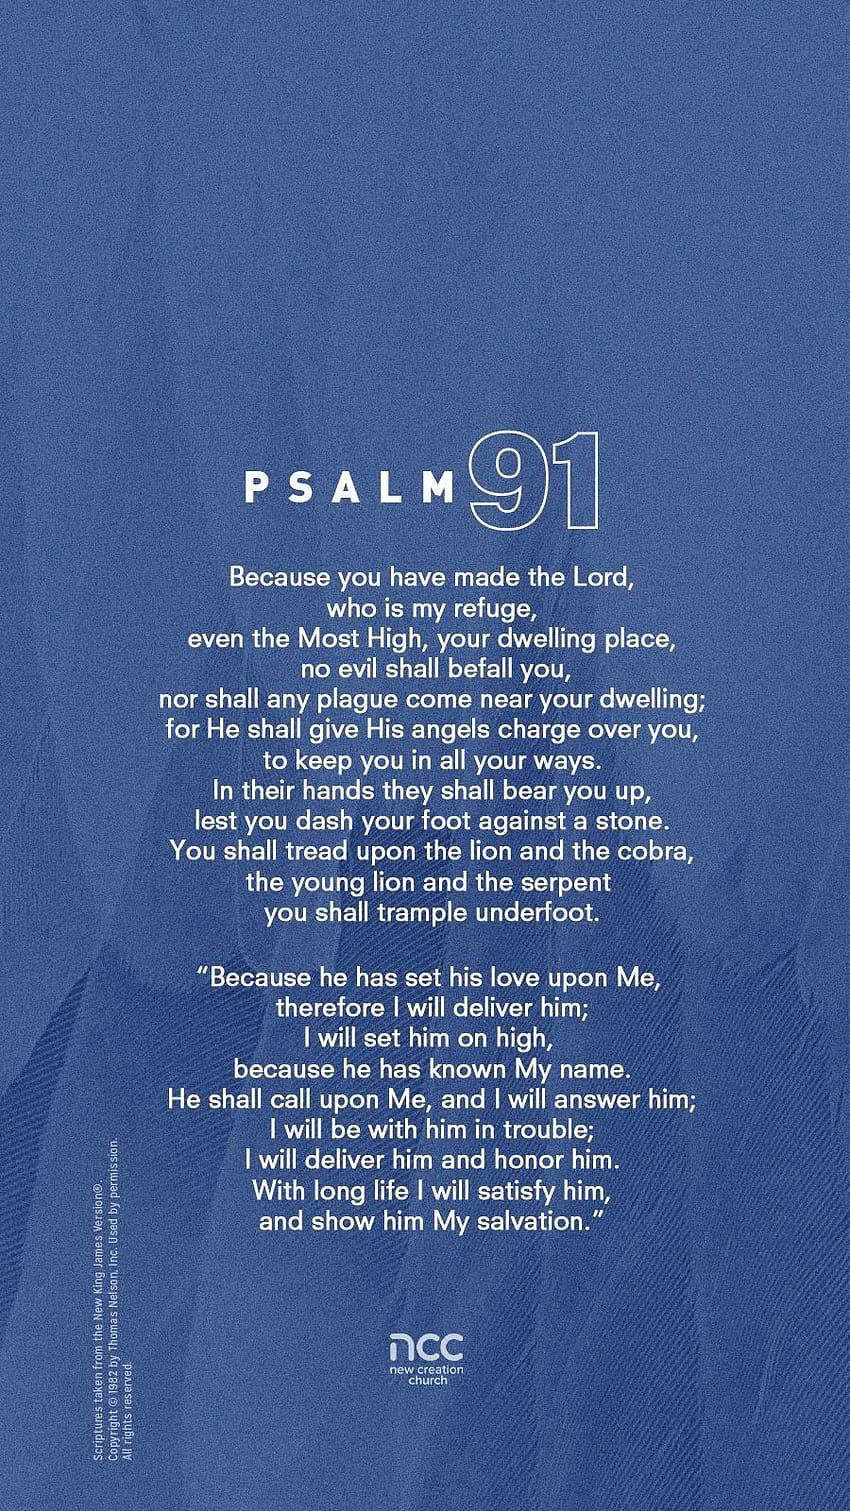 Psalm 91 phone lock screen wallpaper  Psalms Psalm 91 Phone lock screen  wallpaper